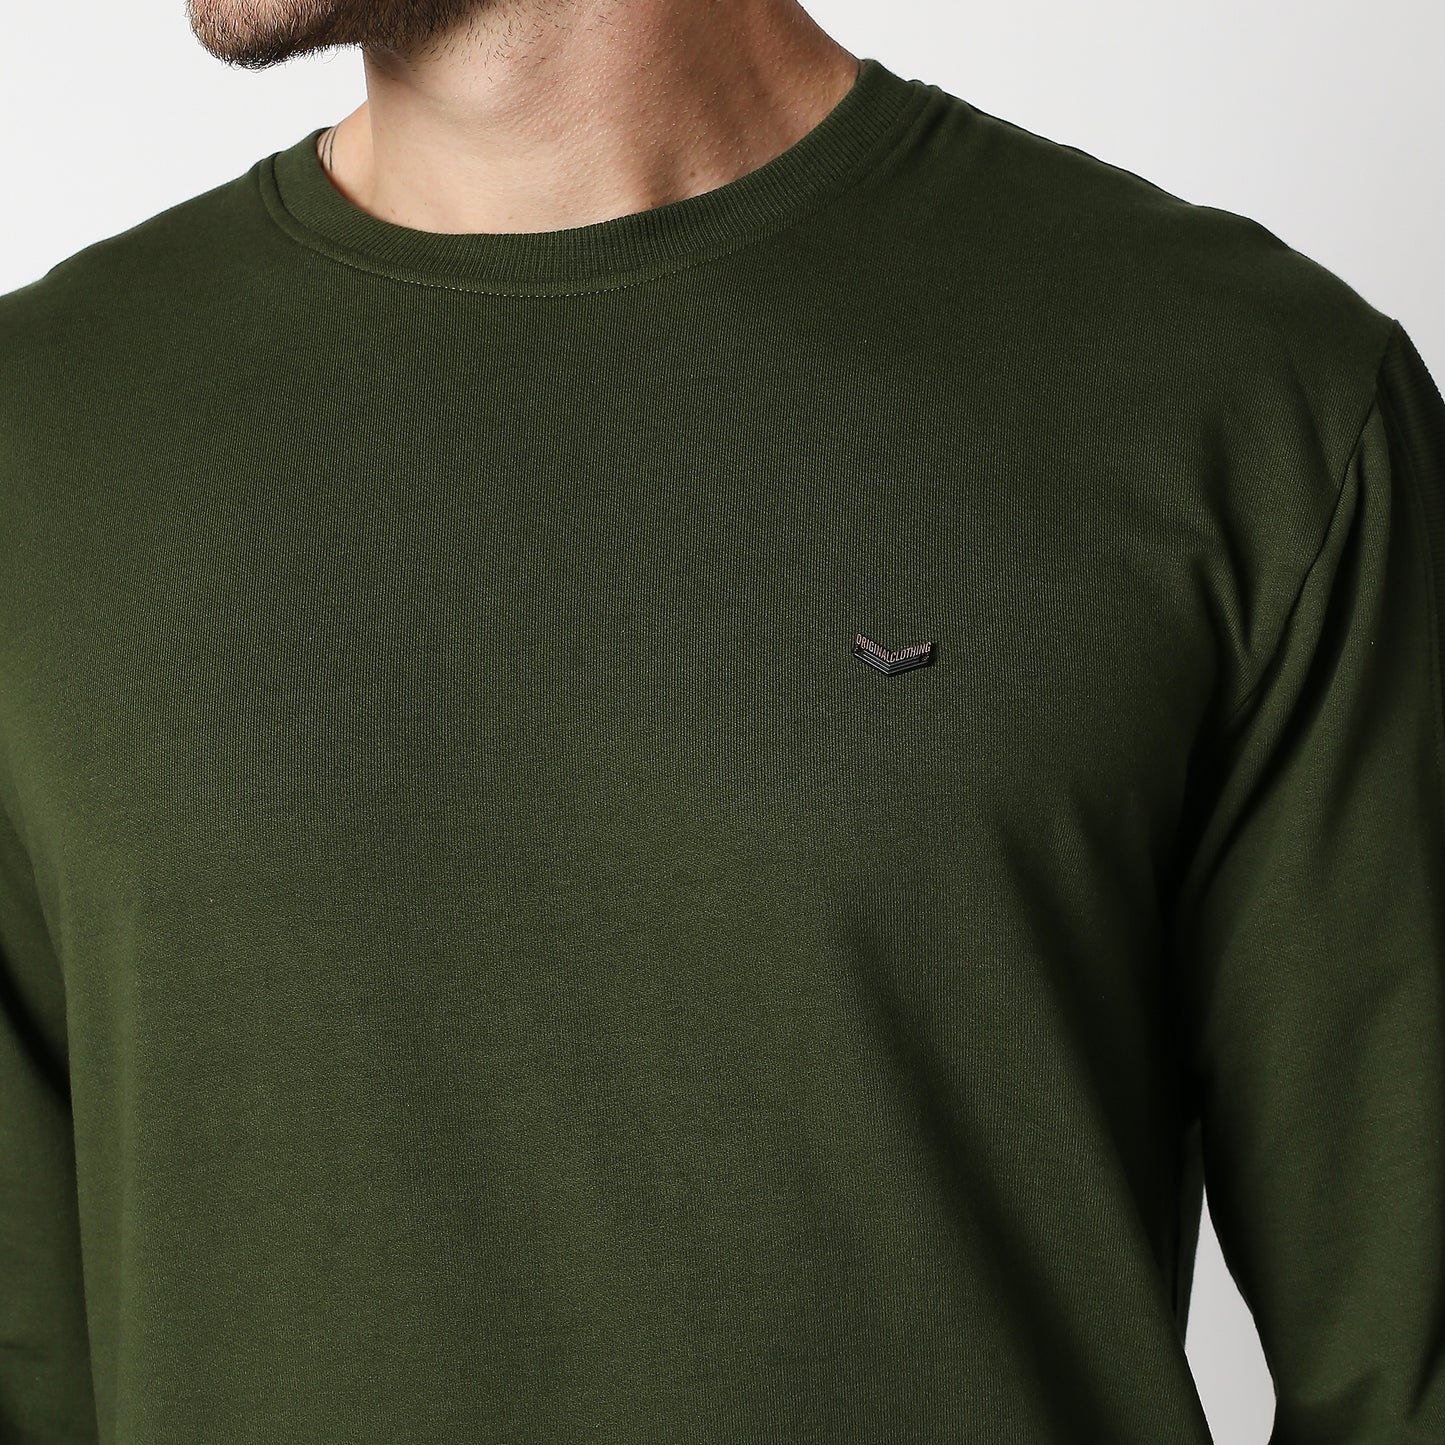 Fostino Mehendi Green Pullover Full Sleeves T-Shirt with Rib on Sleeves - Fostino - T-Shirts